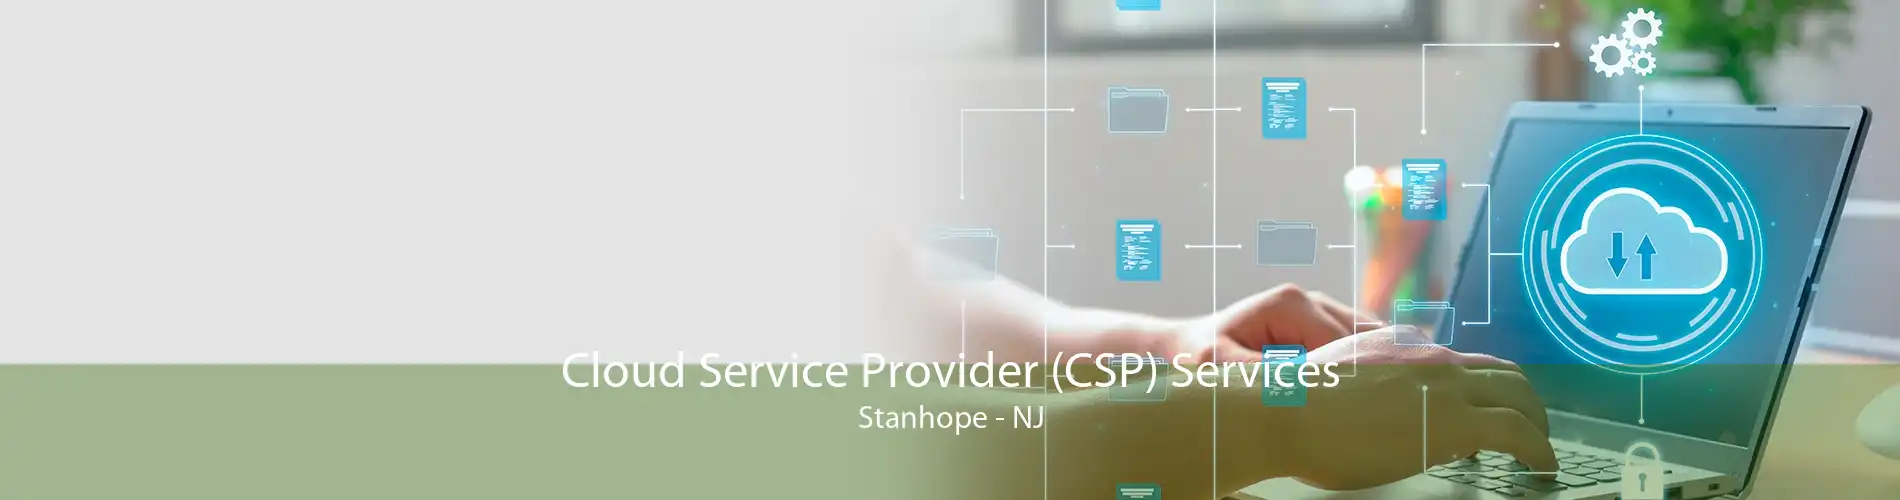 Cloud Service Provider (CSP) Services Stanhope - NJ